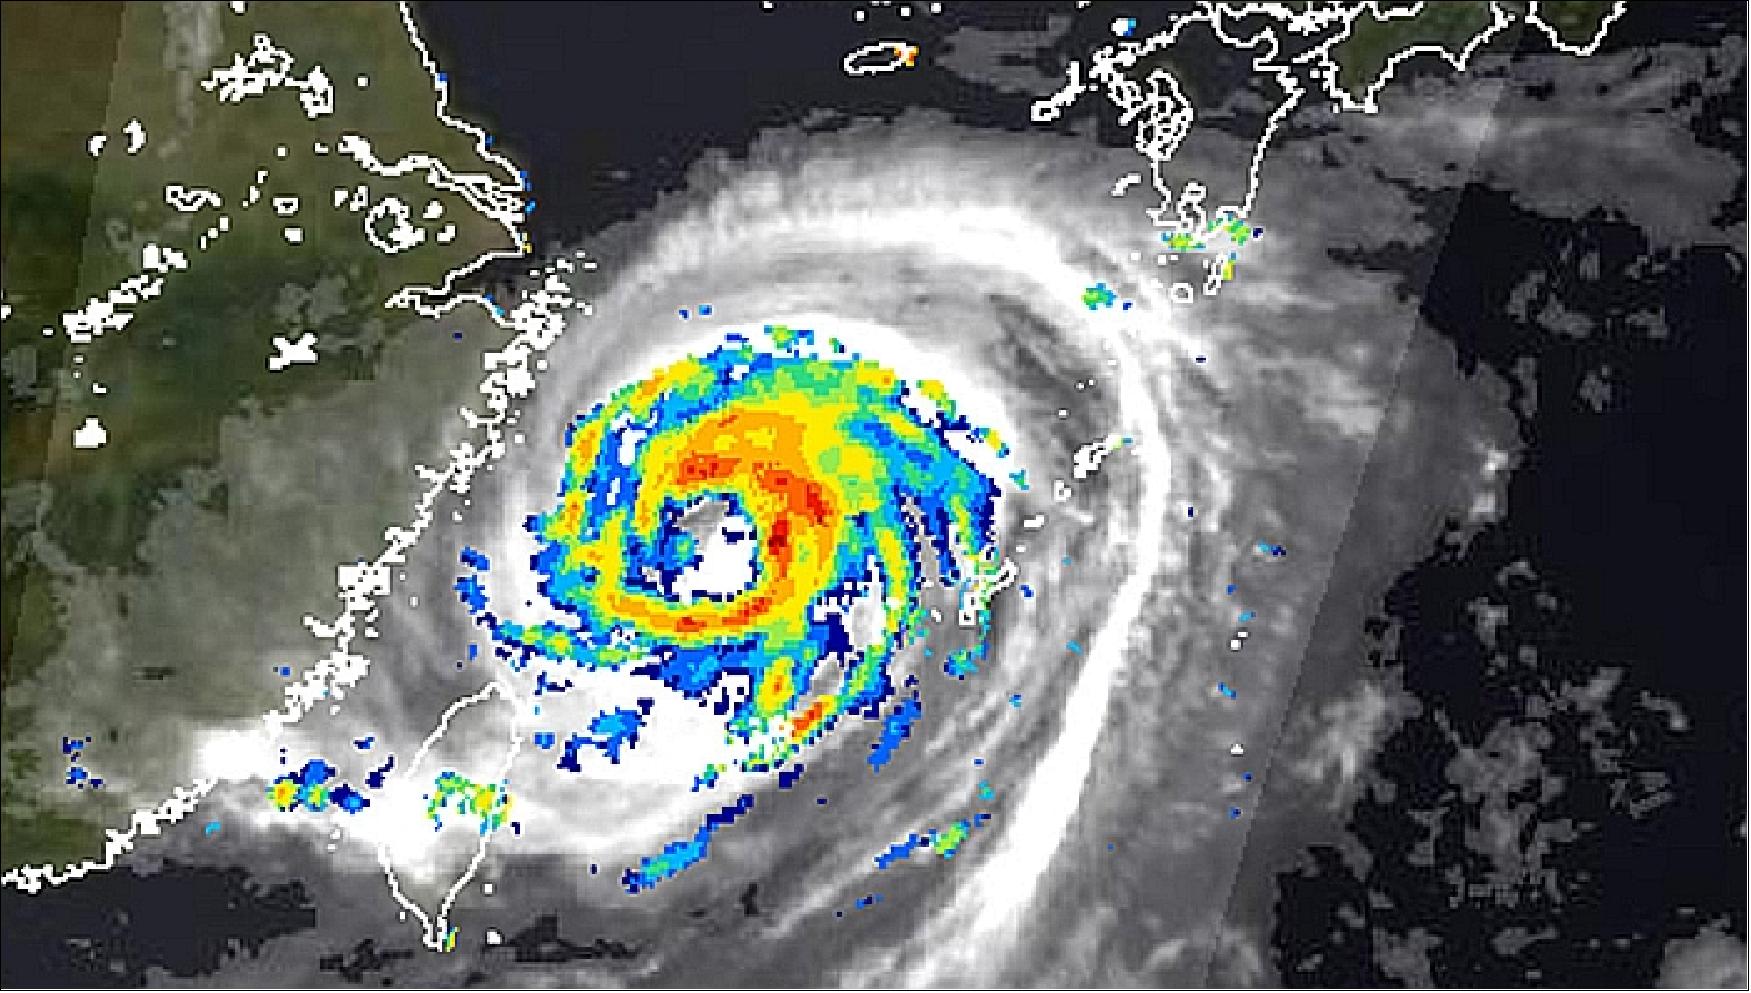 Figure 20: Rainfall image of the Typhoon No.11 (Haikui) approaching the east coast of China, observed by Shizuku on August 7, 2012 (image credit: JAXA) 59)